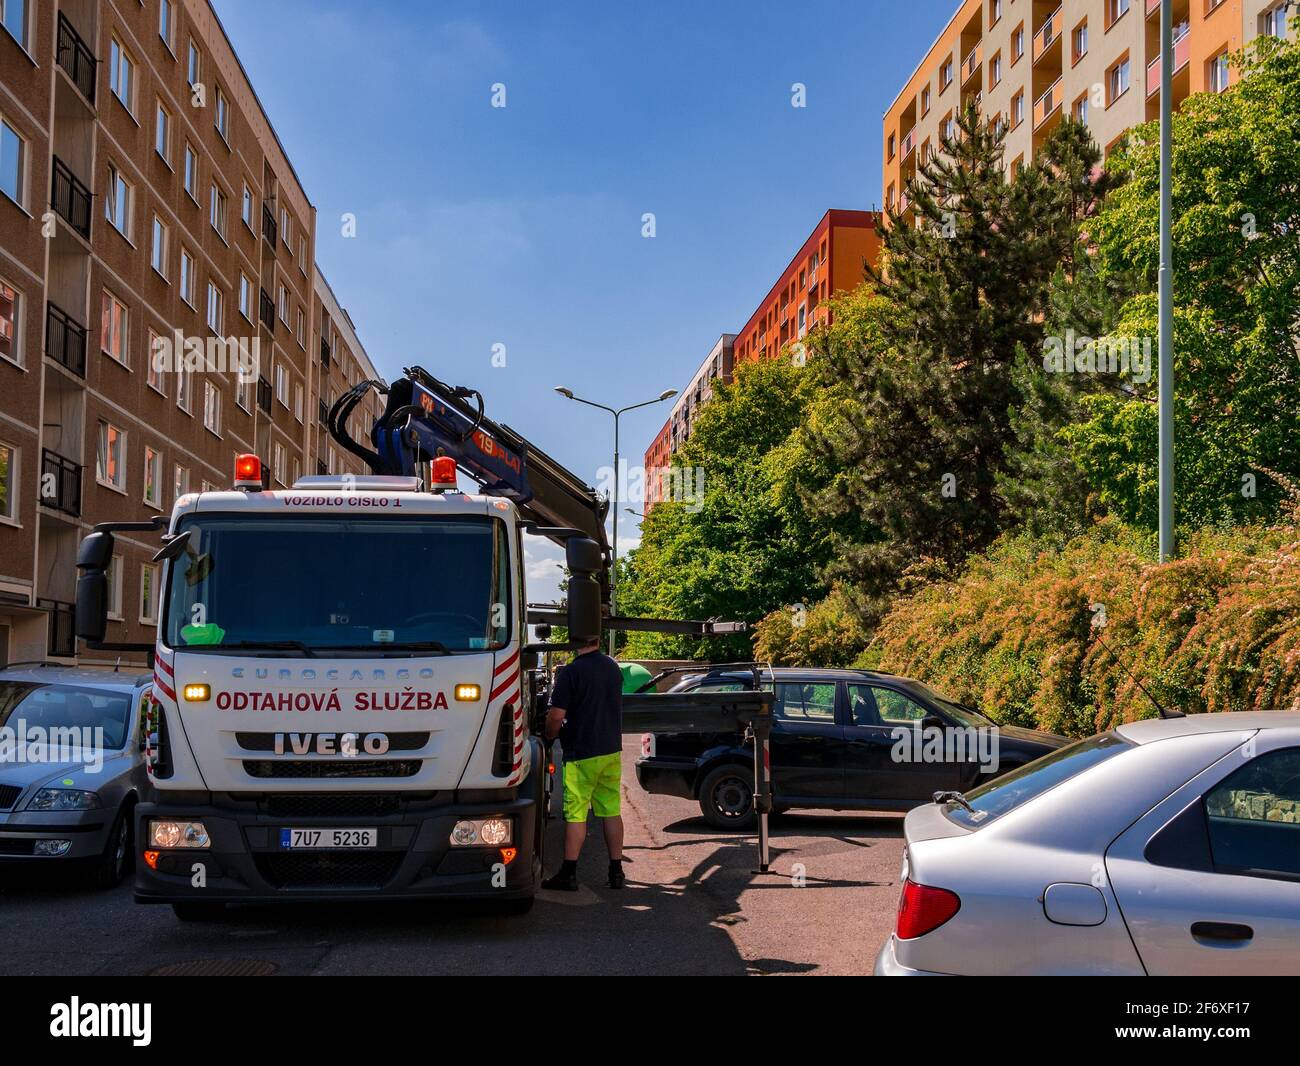 Usti nad Labem, Czech republic - 5.21.2018: Towing service car raises a car. Stock Photo